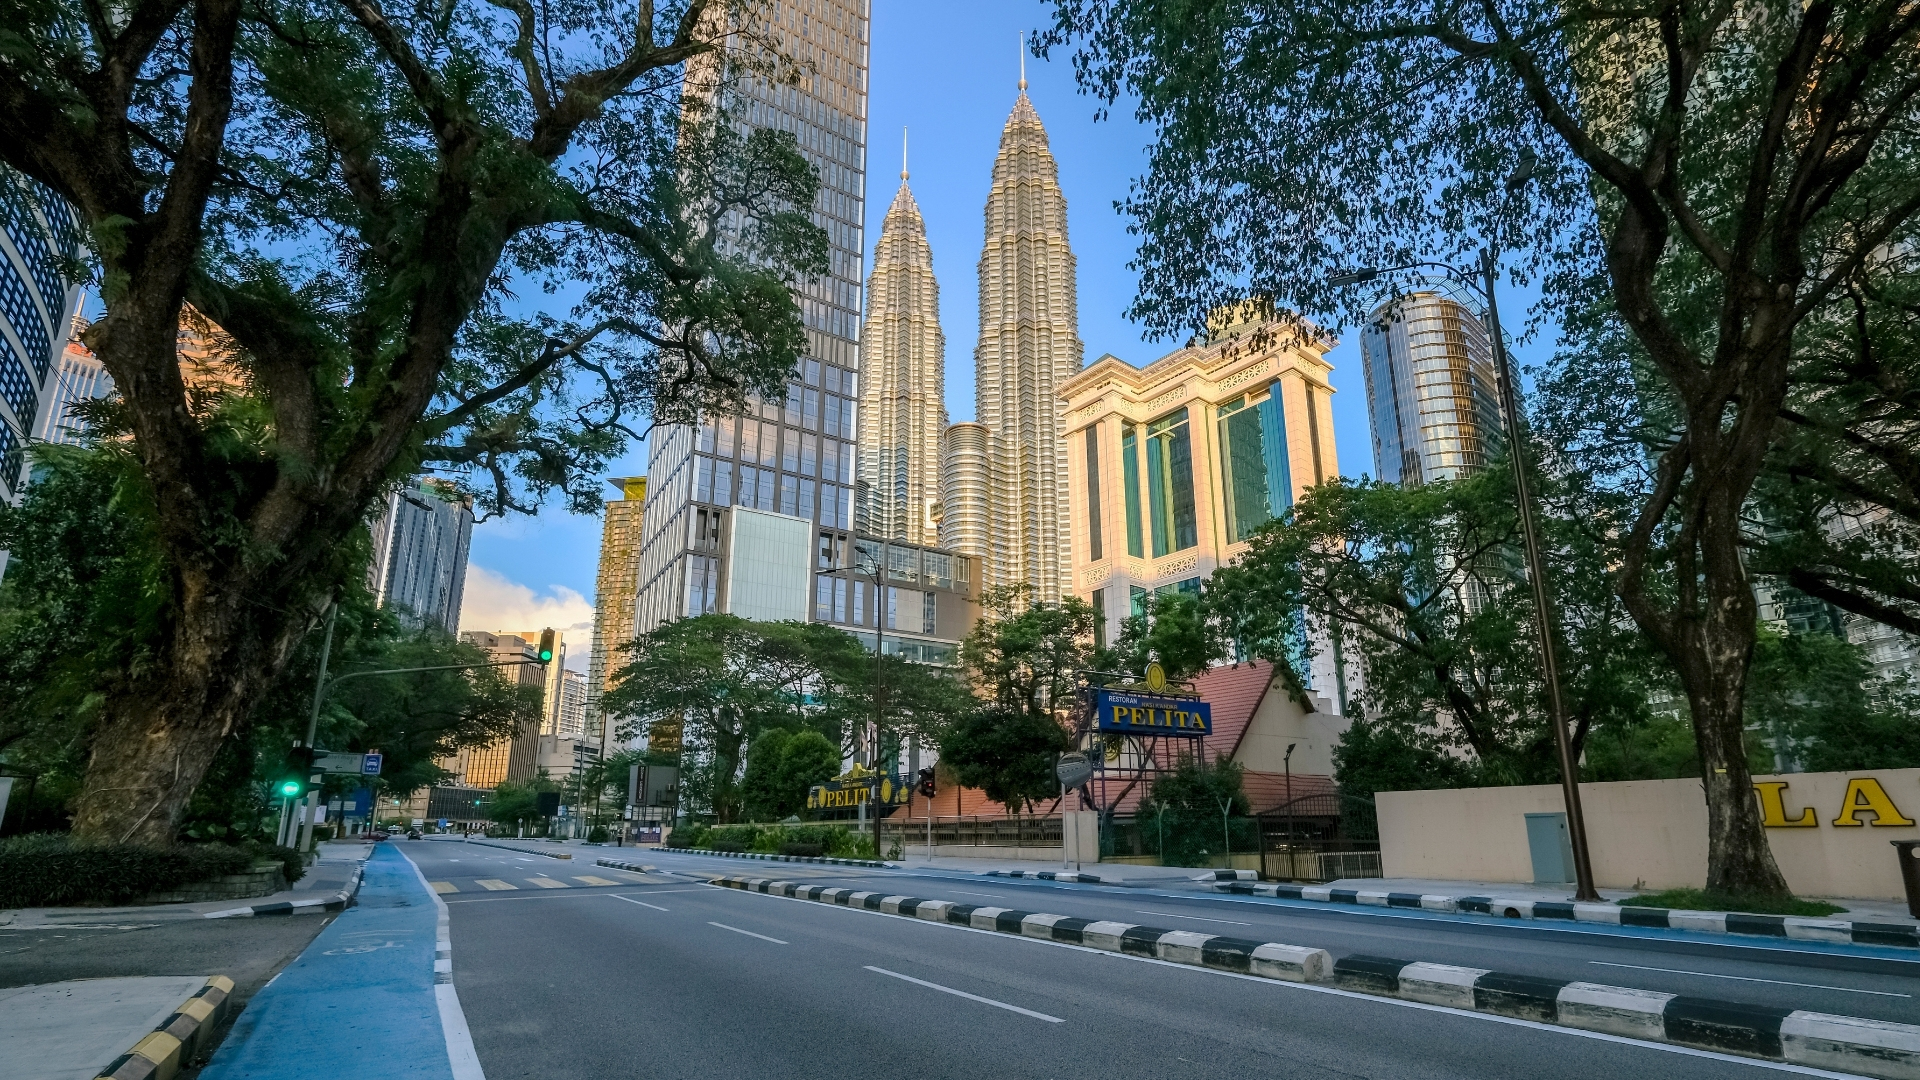 why is Kuala Lumpur so empty?